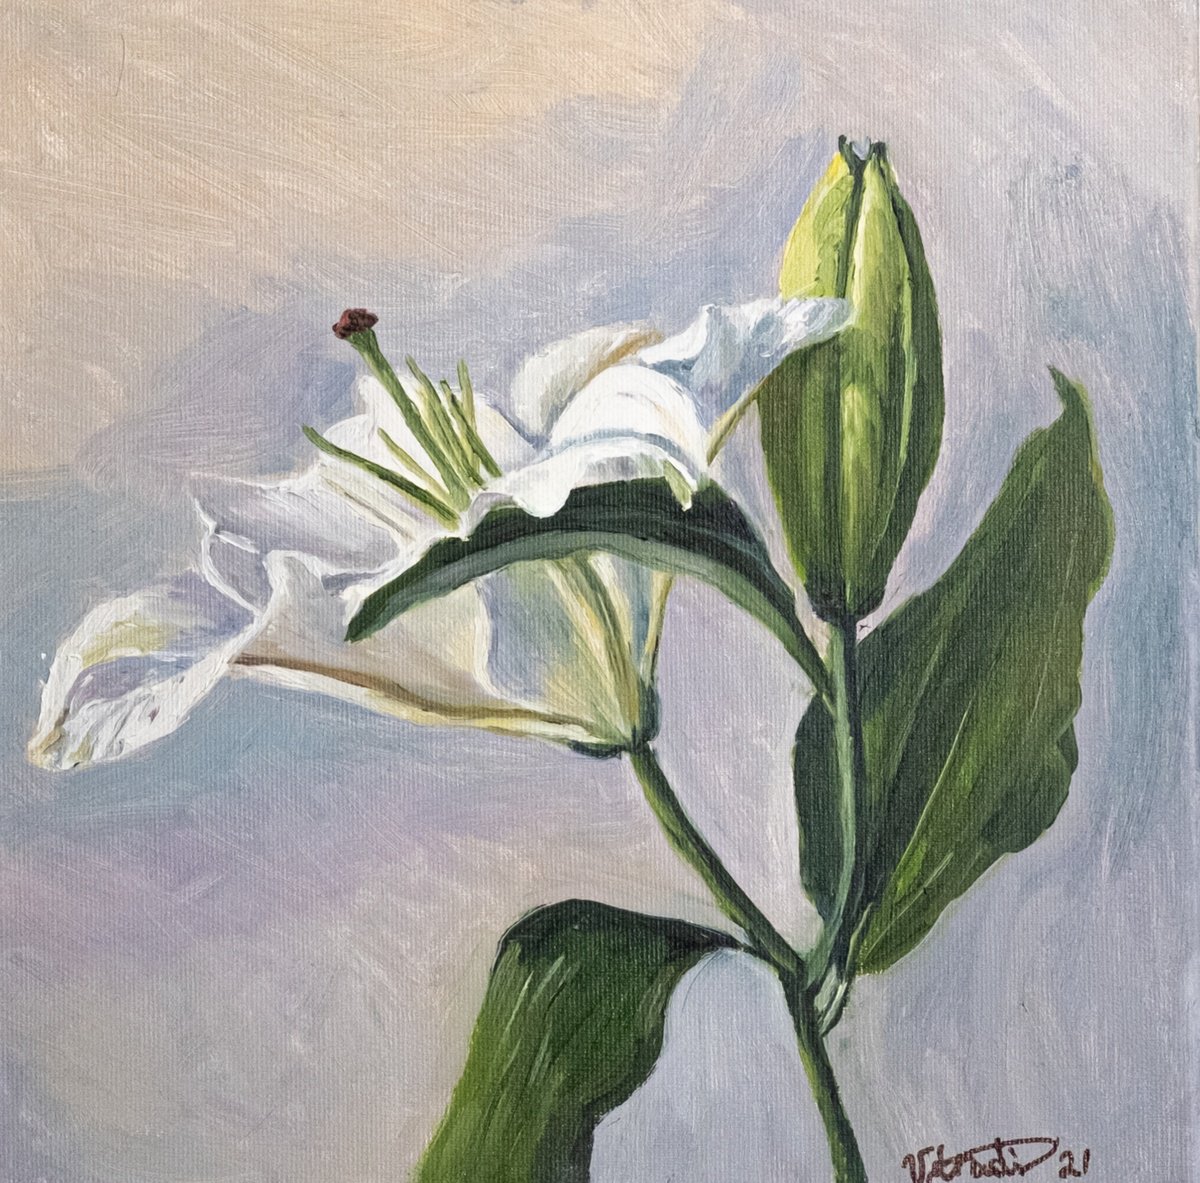 The Flower by Catherine Varadi